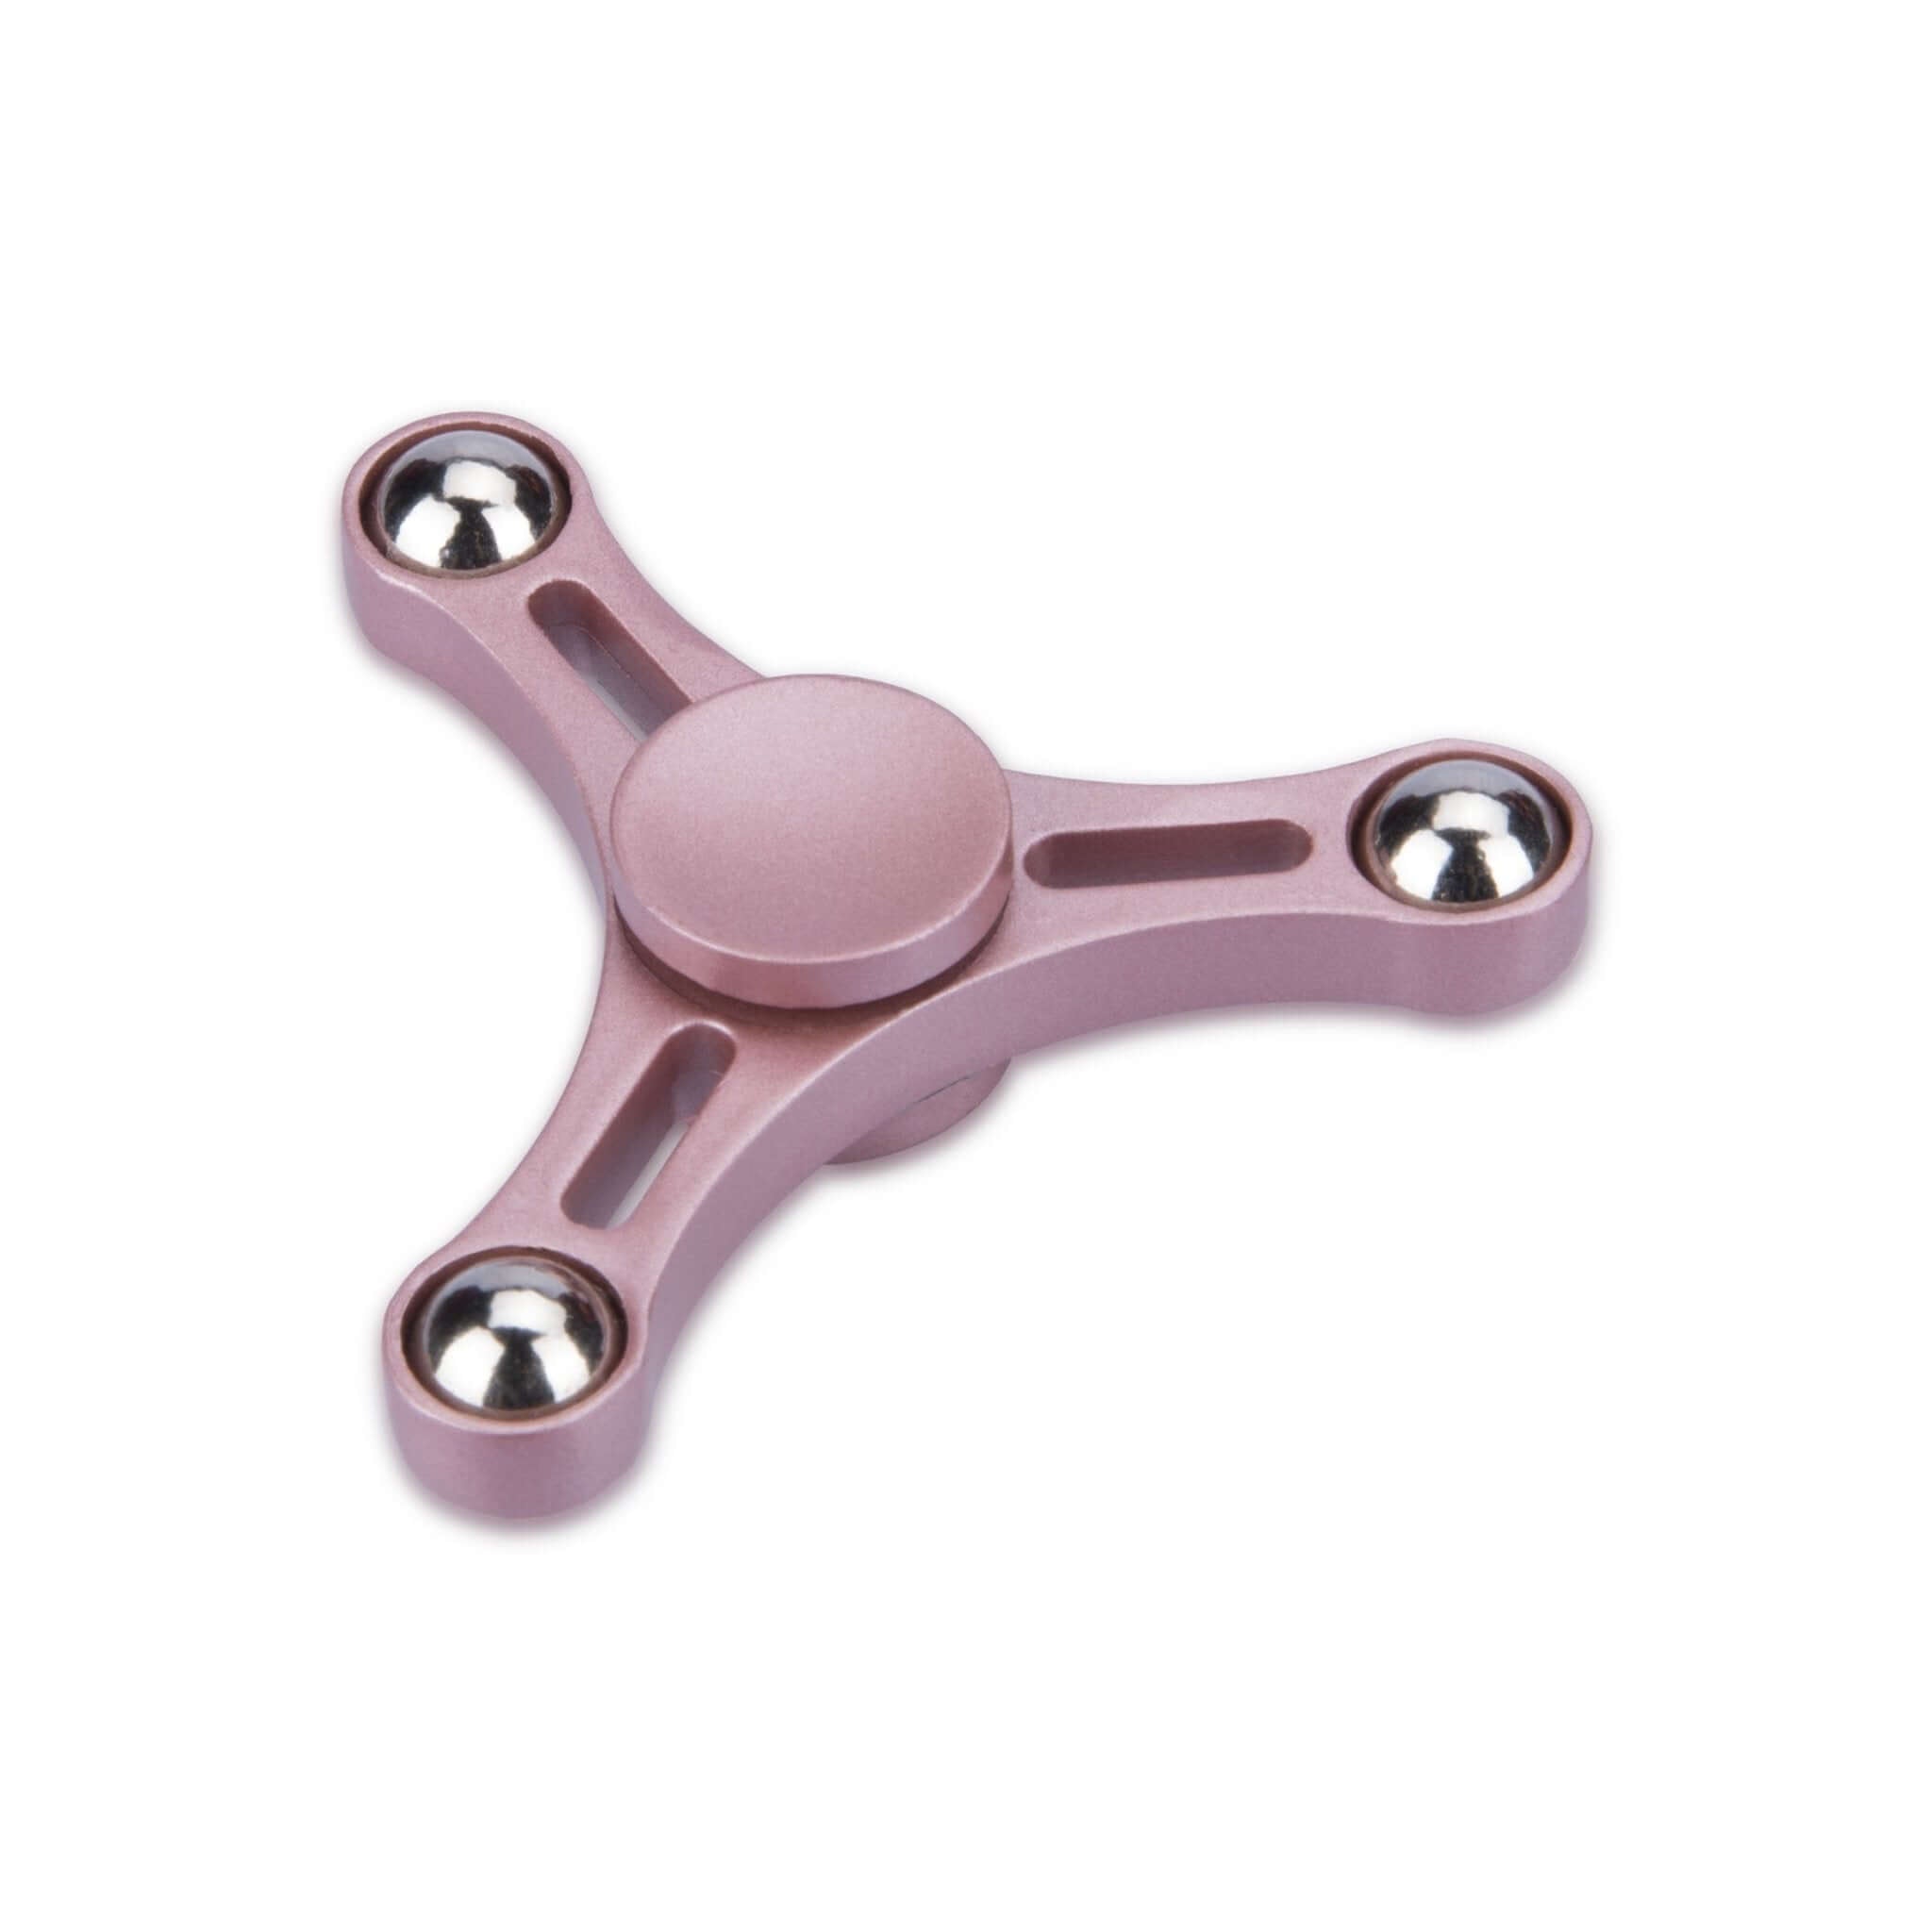 Fidget Spinner (Metallic Series) - Pink Steel Ball - Antsy Labs